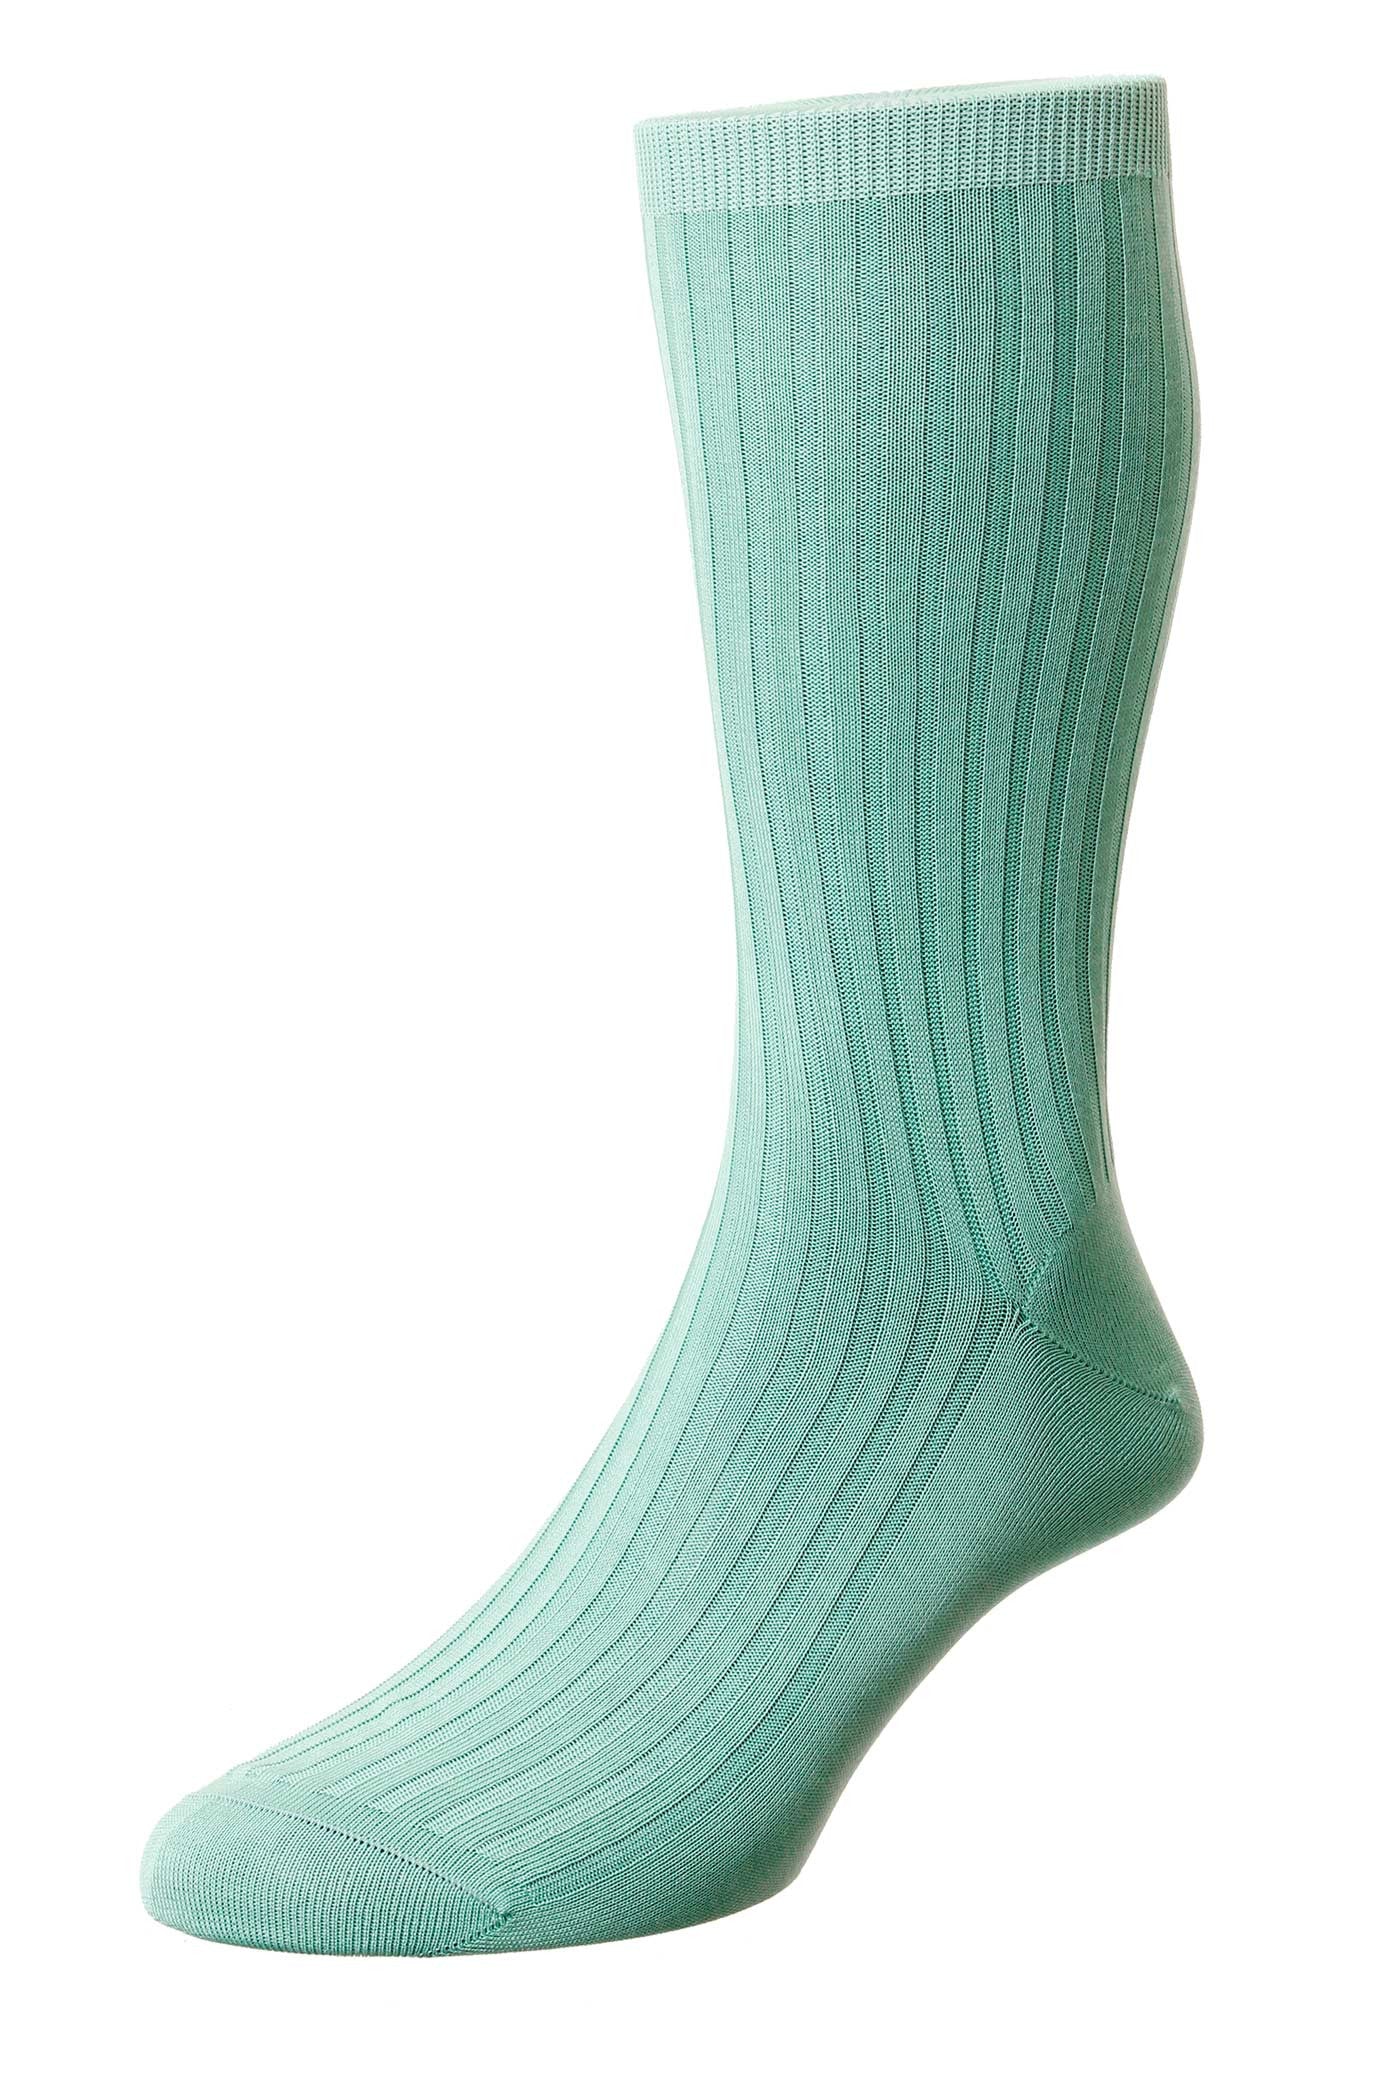 Men's Socks - Danvers (5614) 5x3 Rib Fil d'Ecosse / Cotton Lisle - MINT